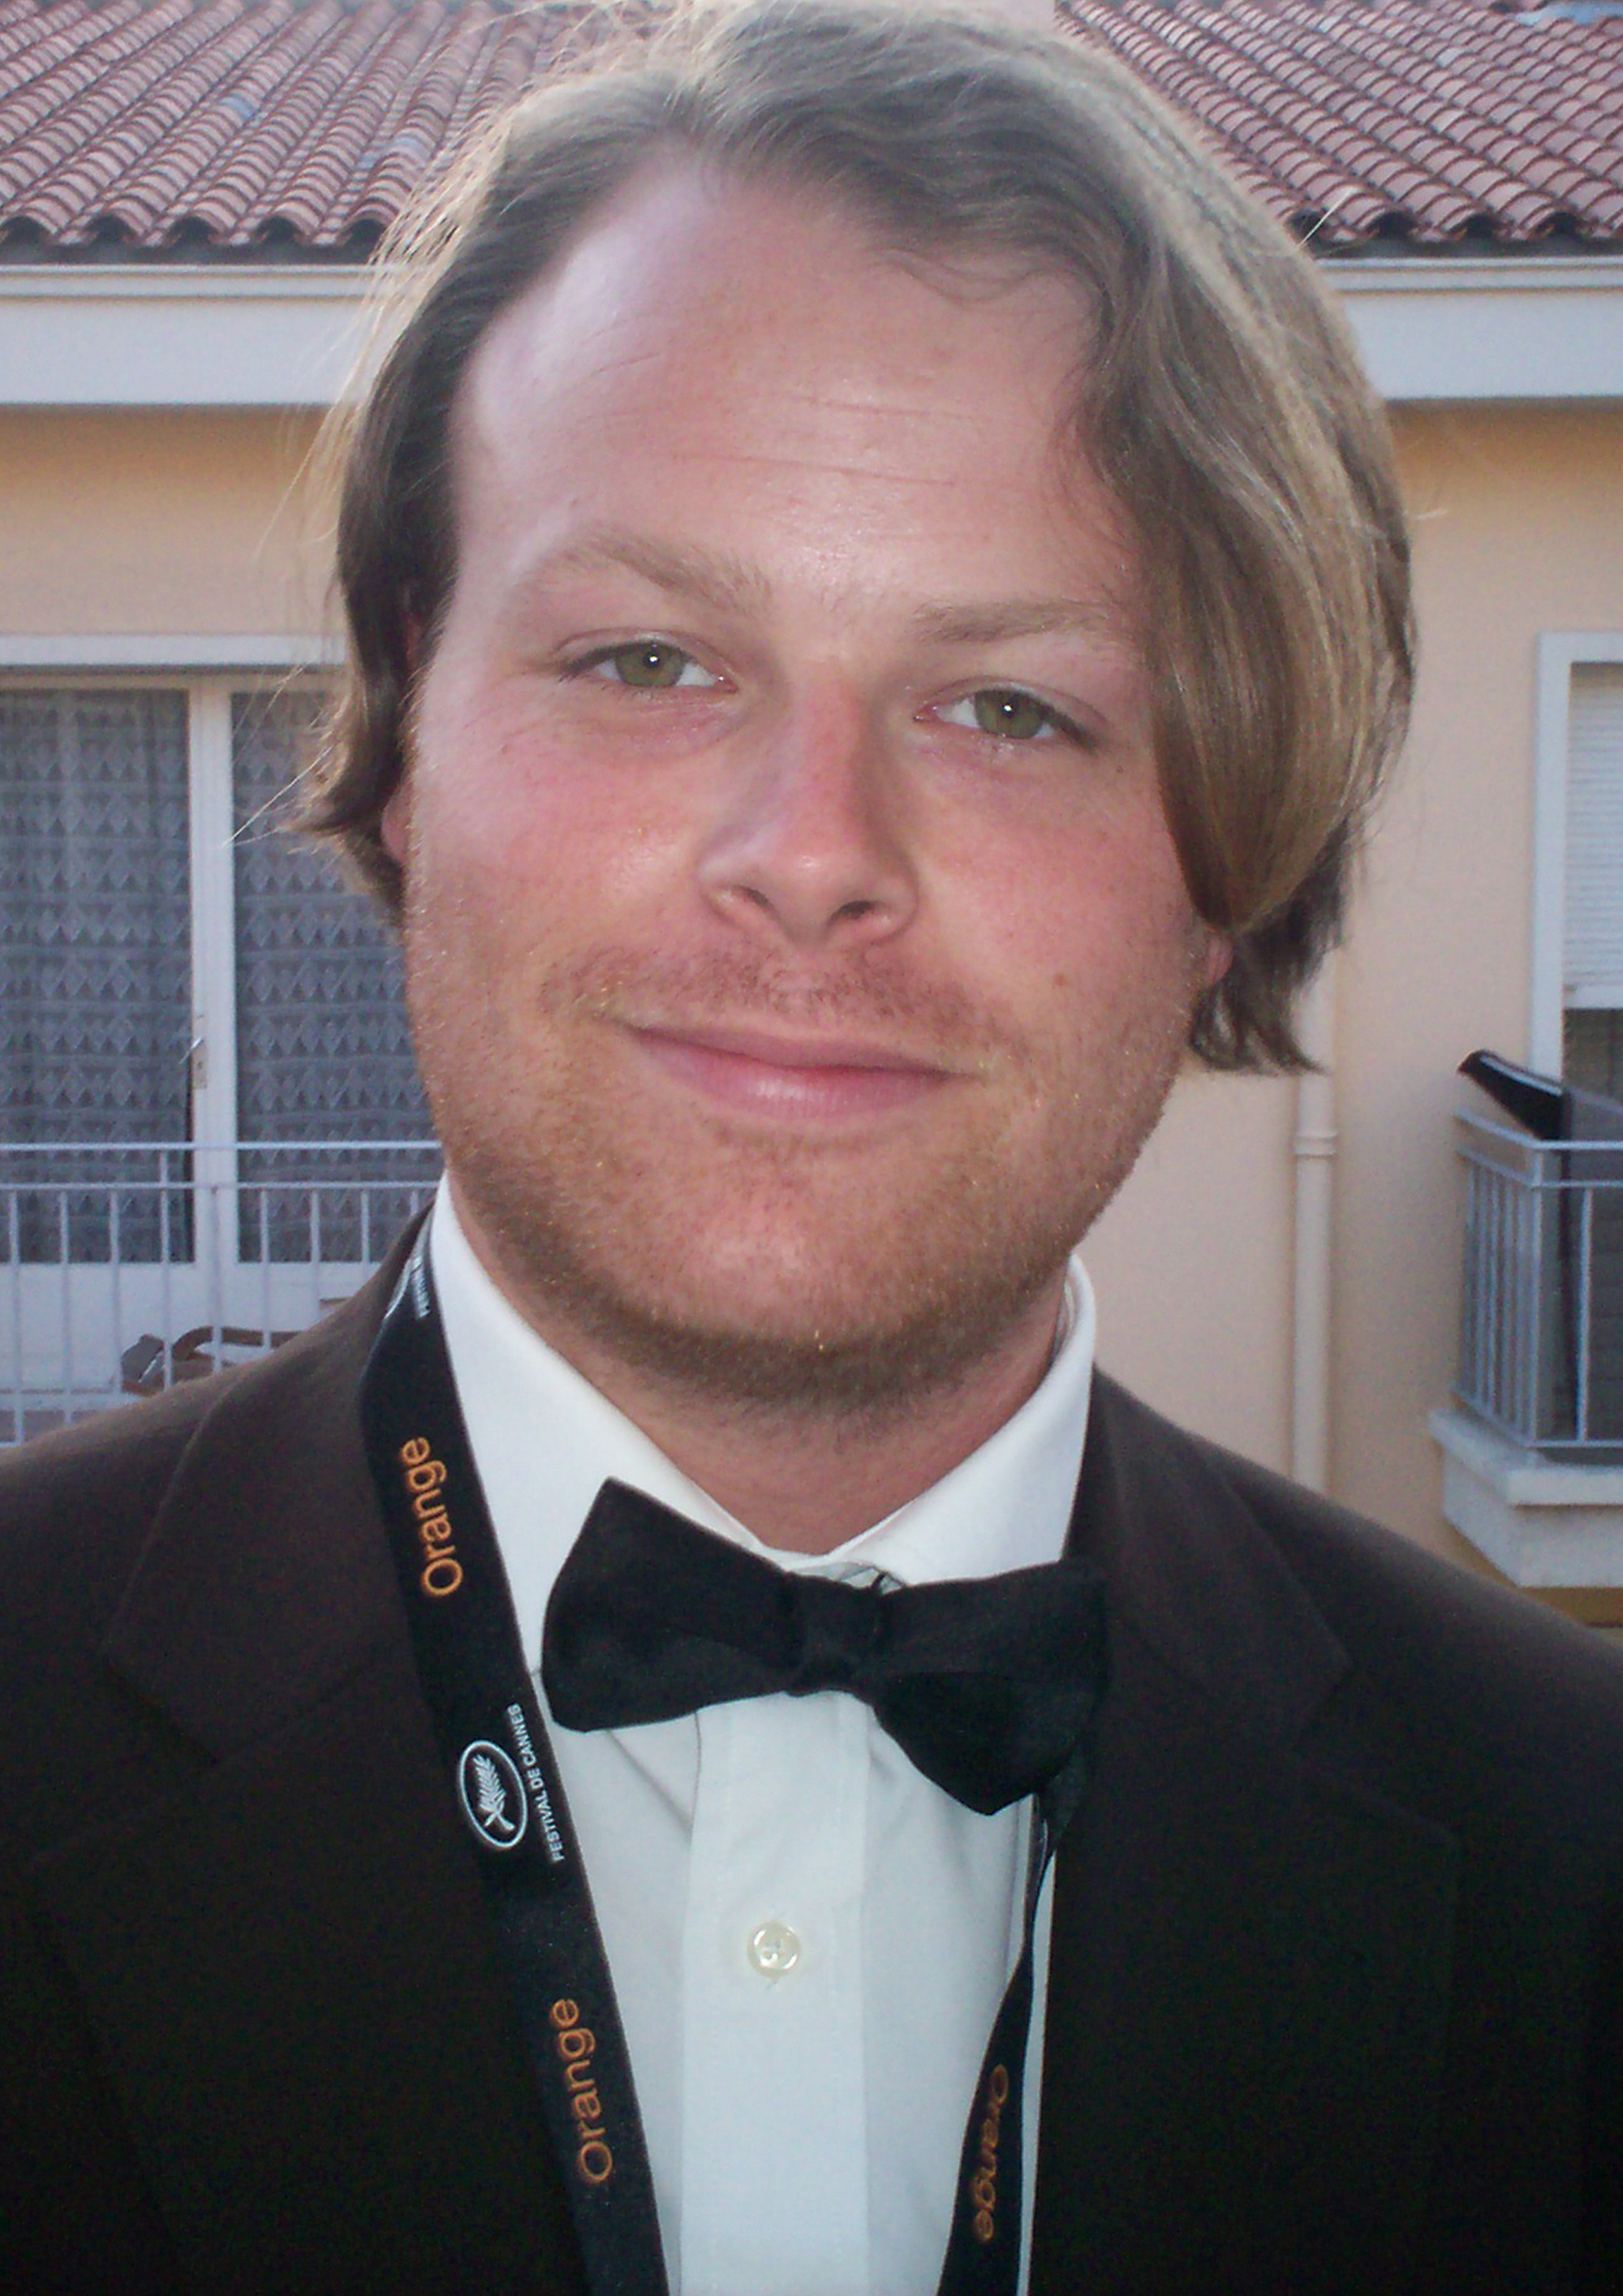 Producer/Director Paul James Furlong at Cannes Film Festival